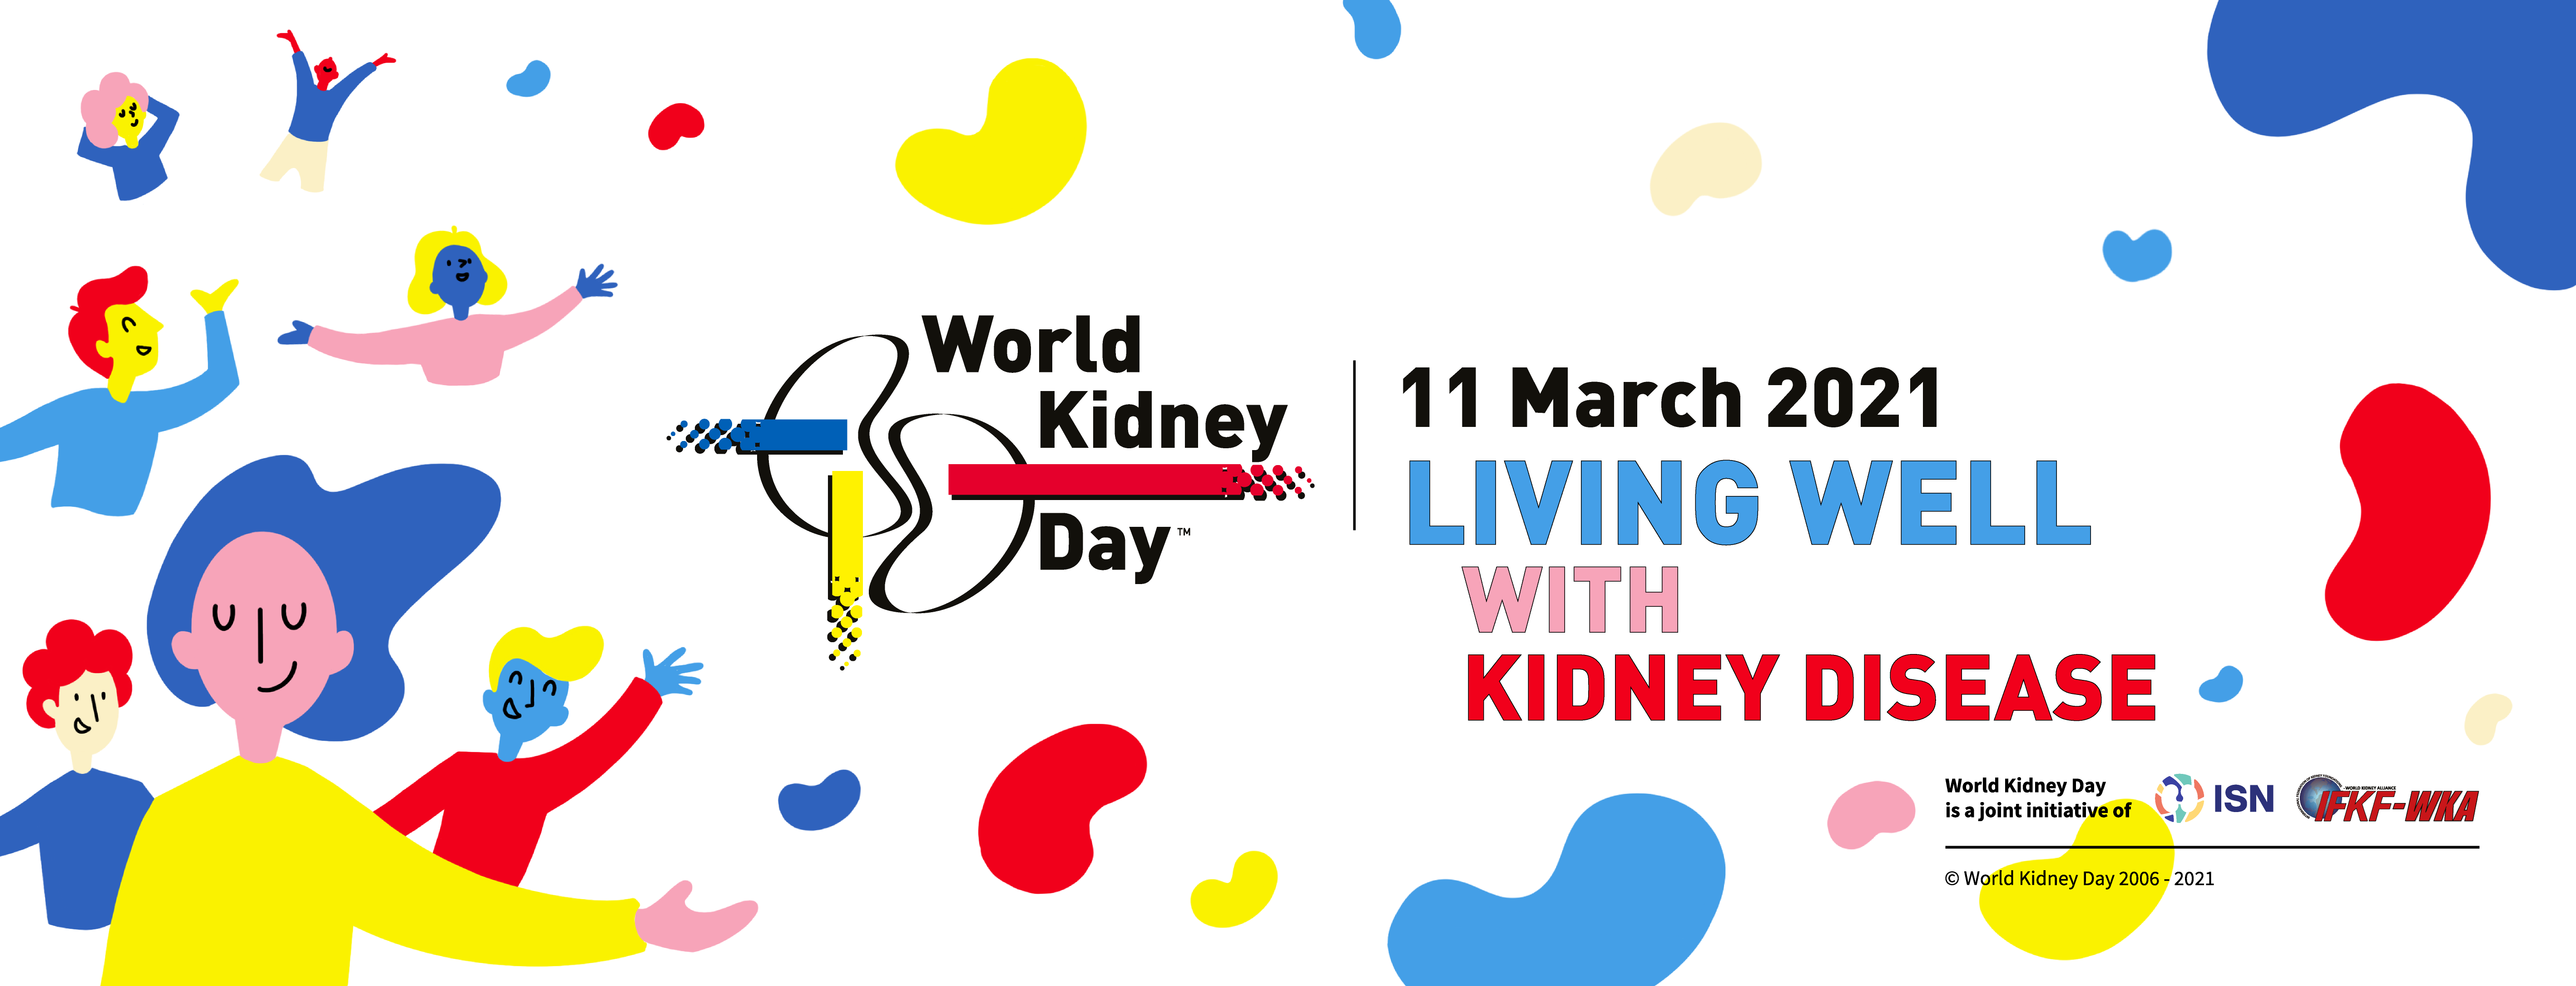 2021 WKD Theme - World Kidney Day